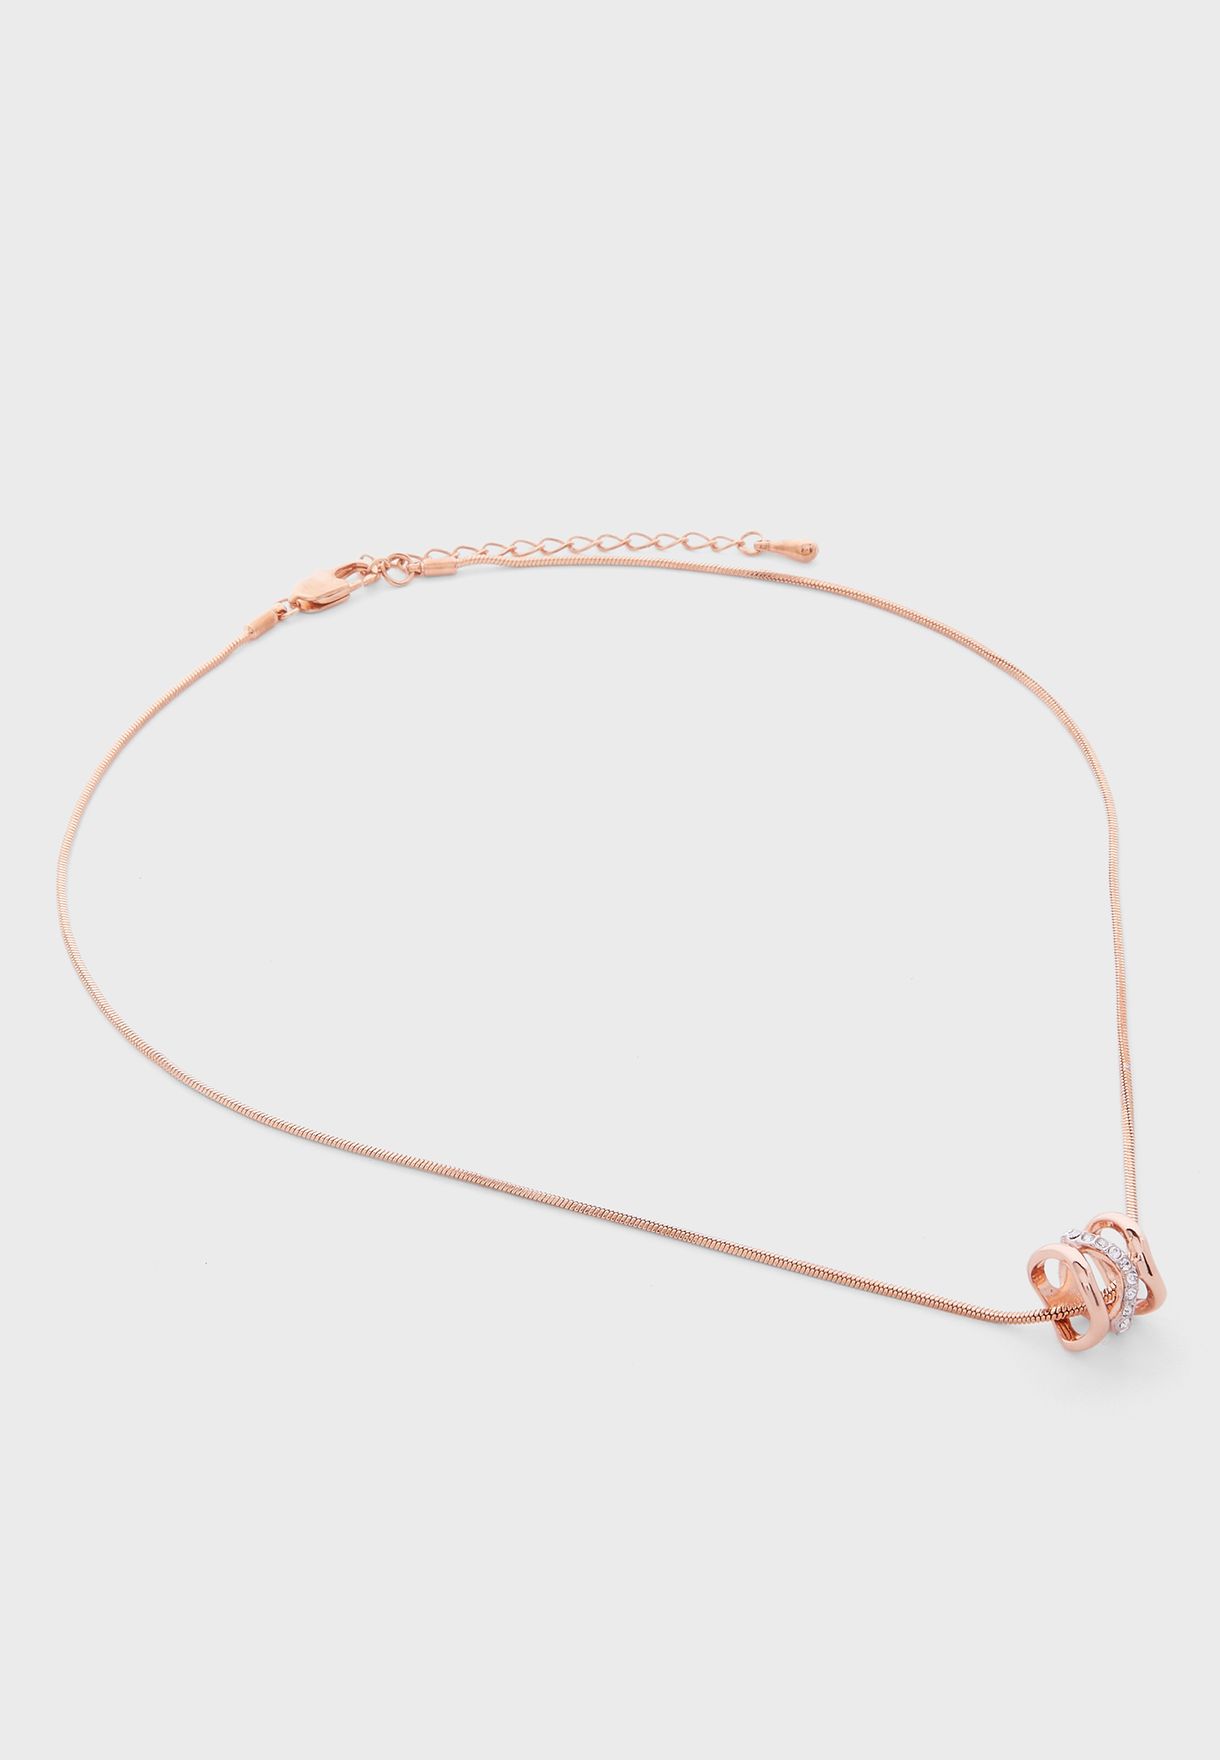 Bayswater Necklace+Earrings+Bracelet Set